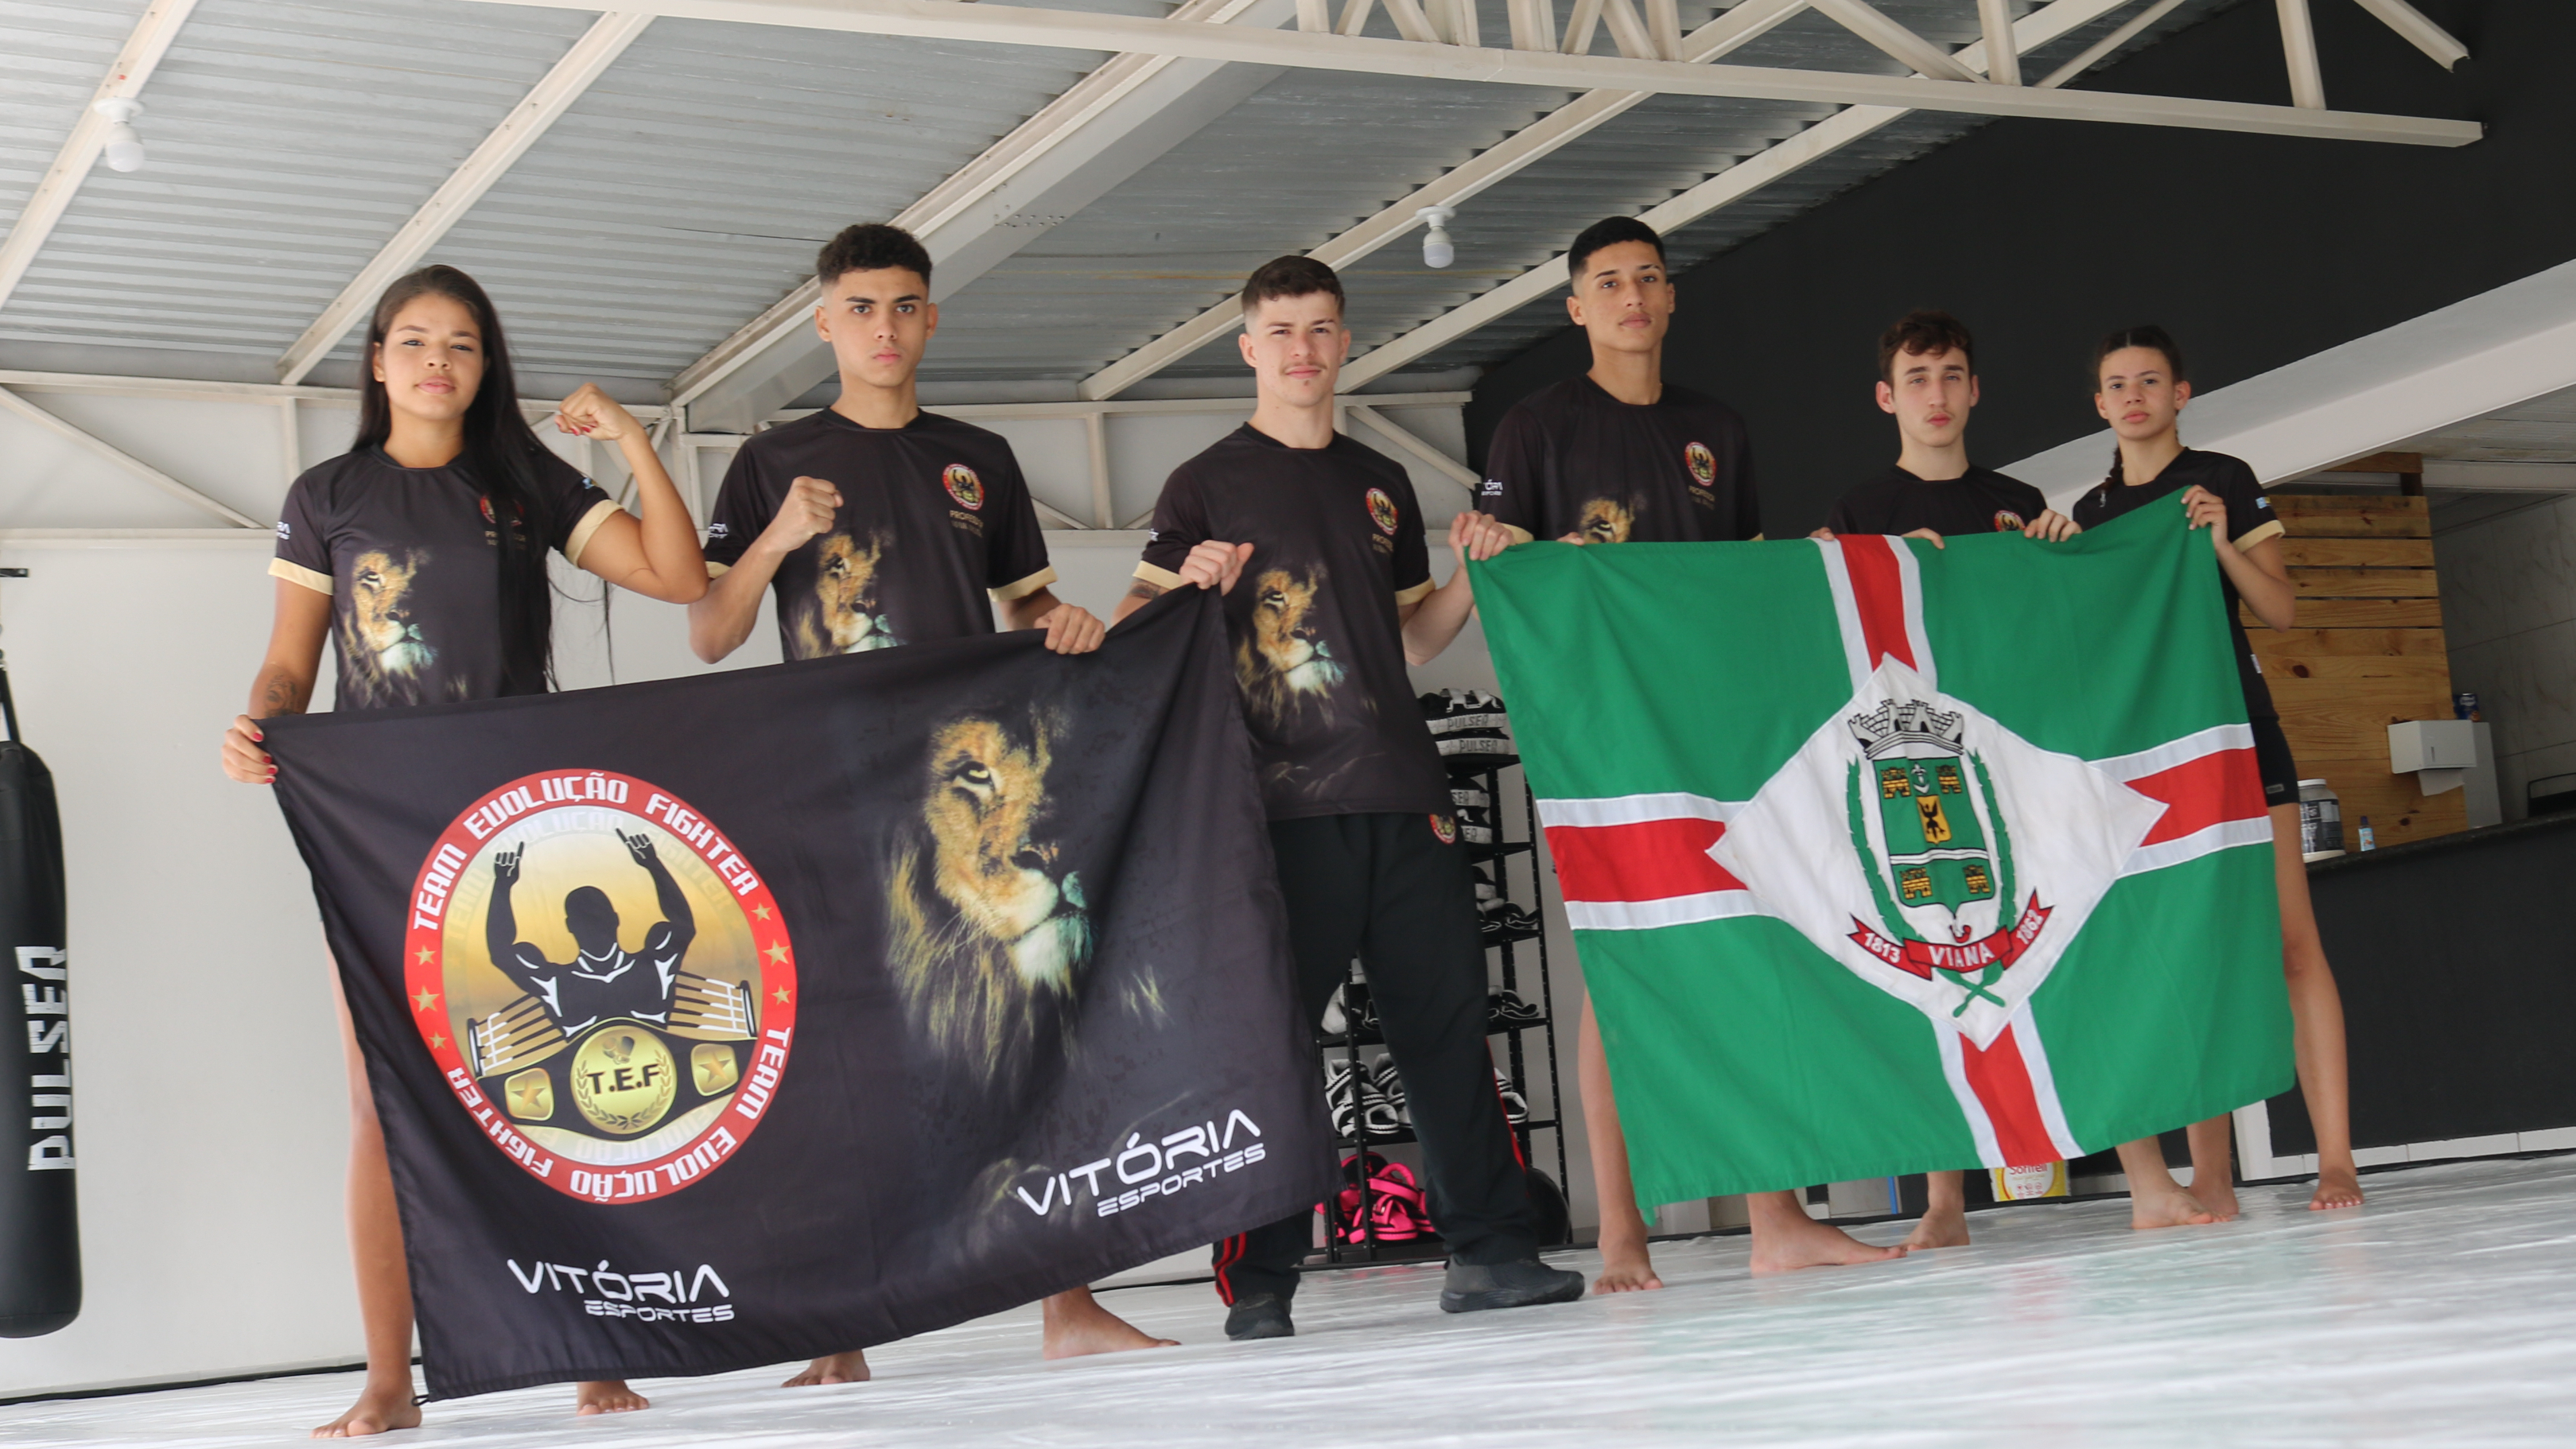 Vianenses vão disputar Campeonato Brasileiro de Kickboxing